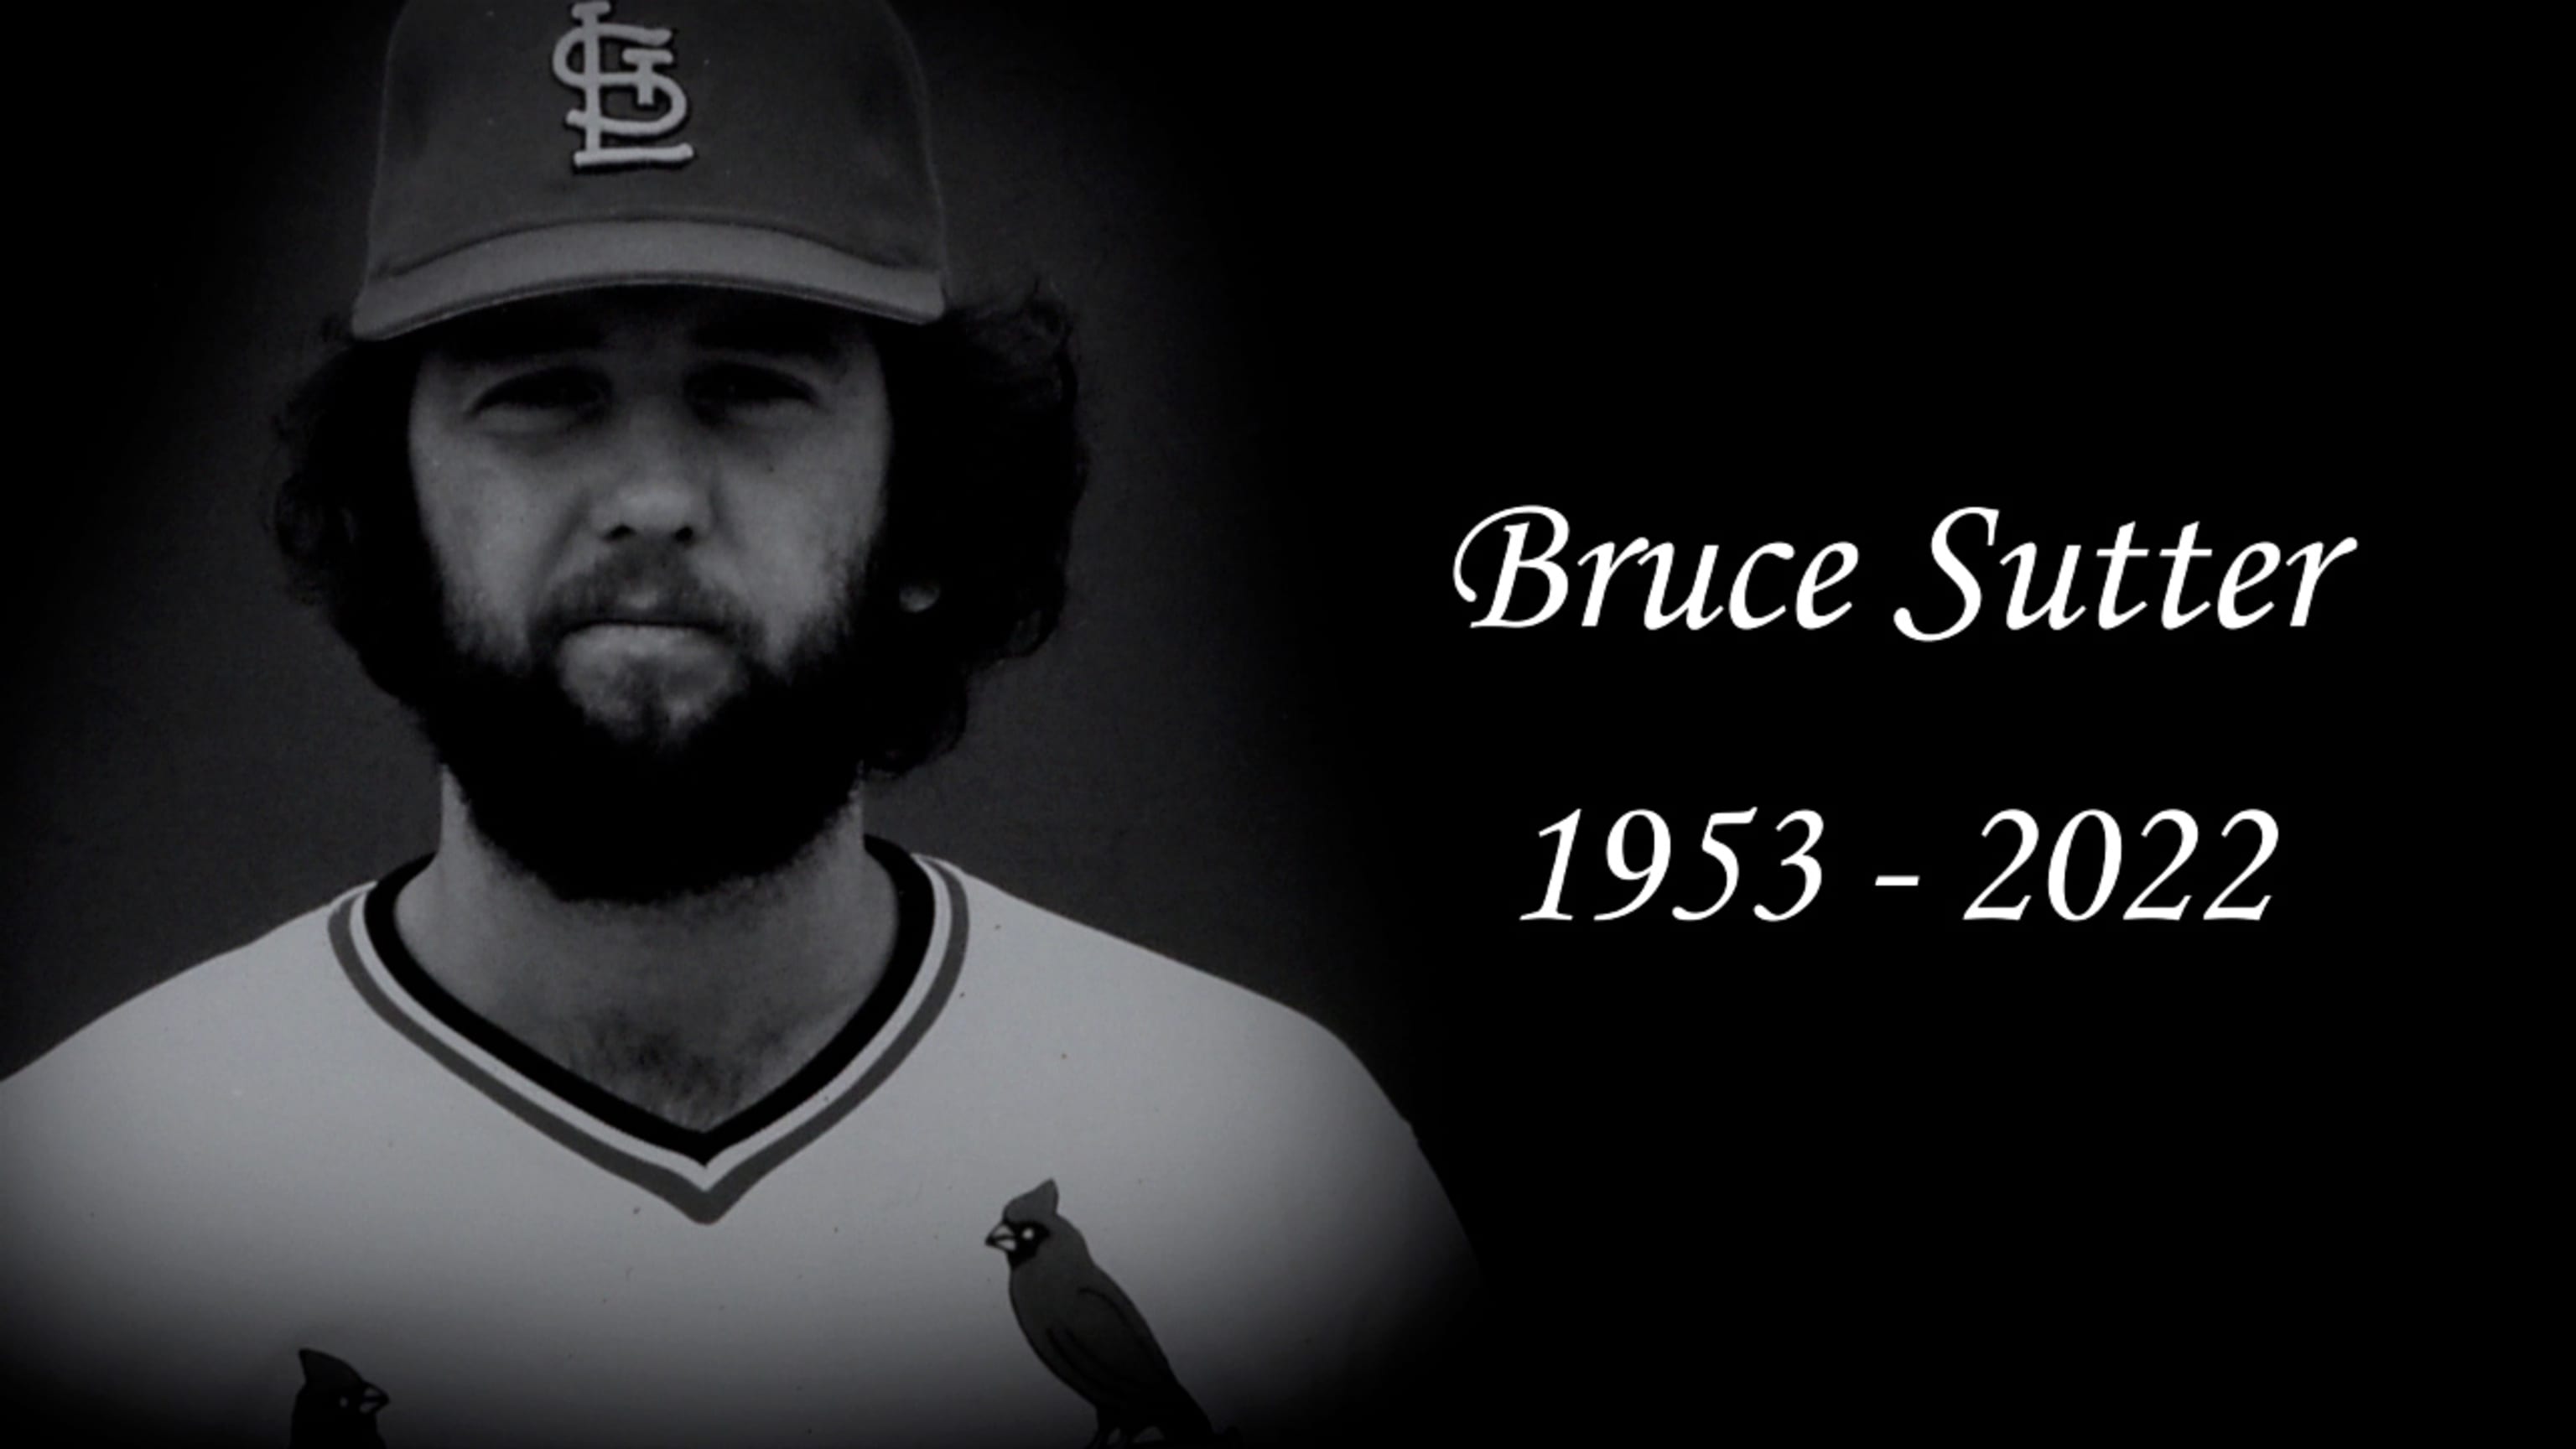 Cardinals' Hall of Famer Bruce Sutter dies at 69